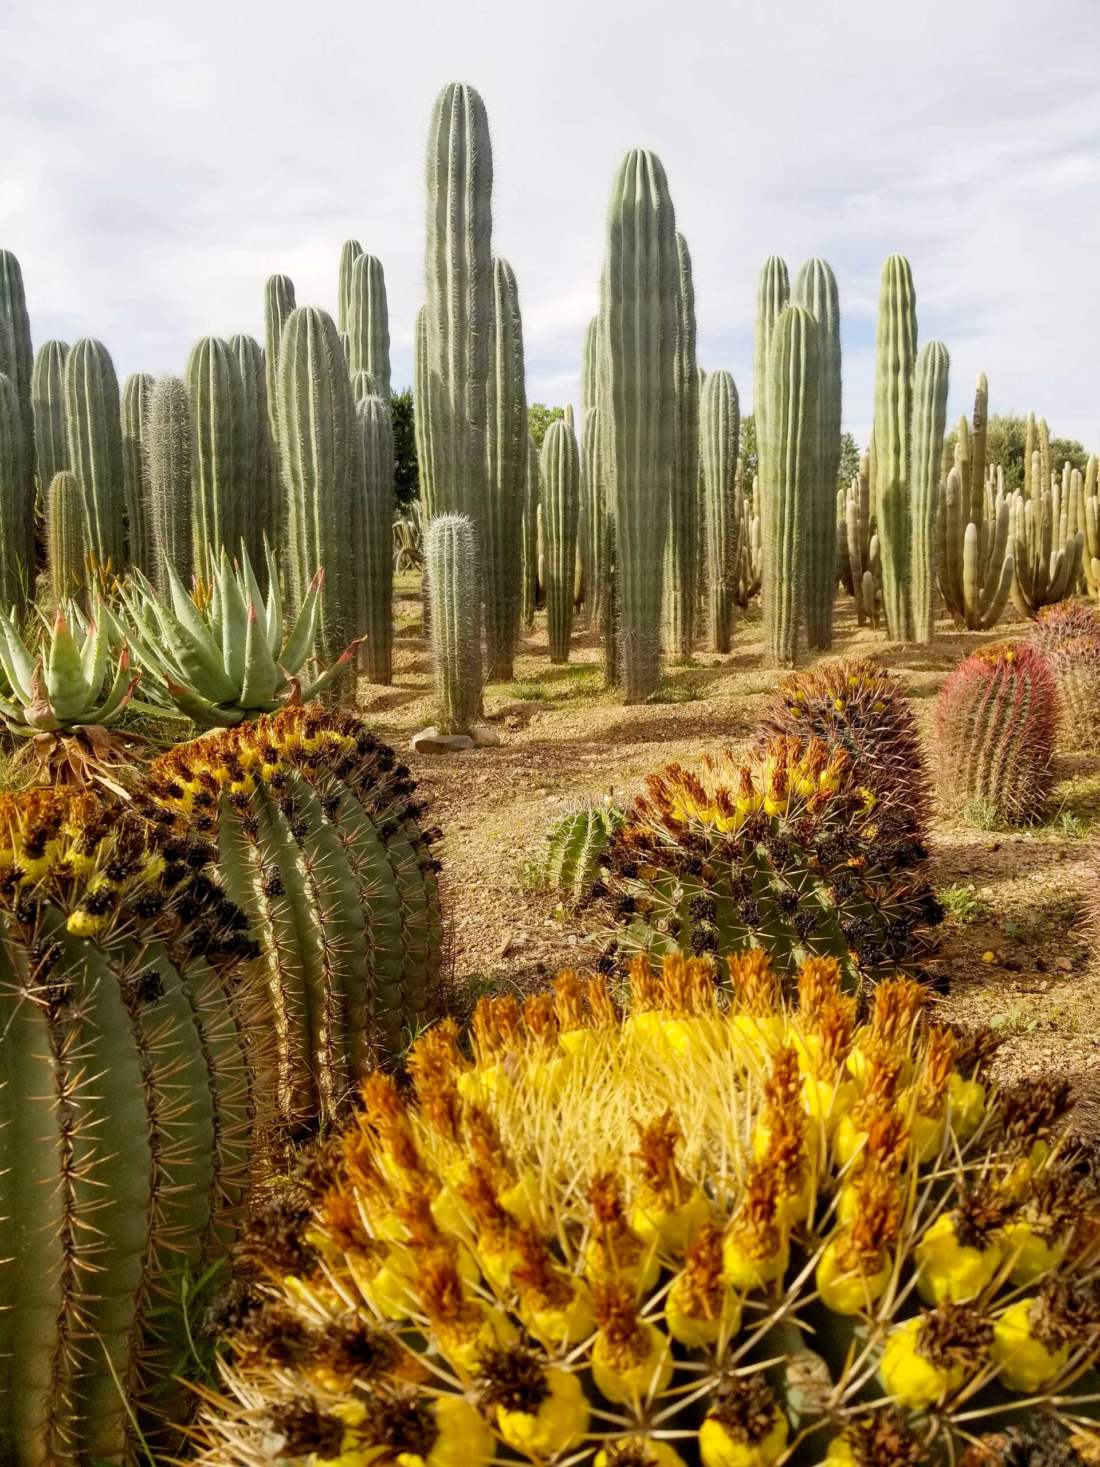 Kaktusová farma, Maroko